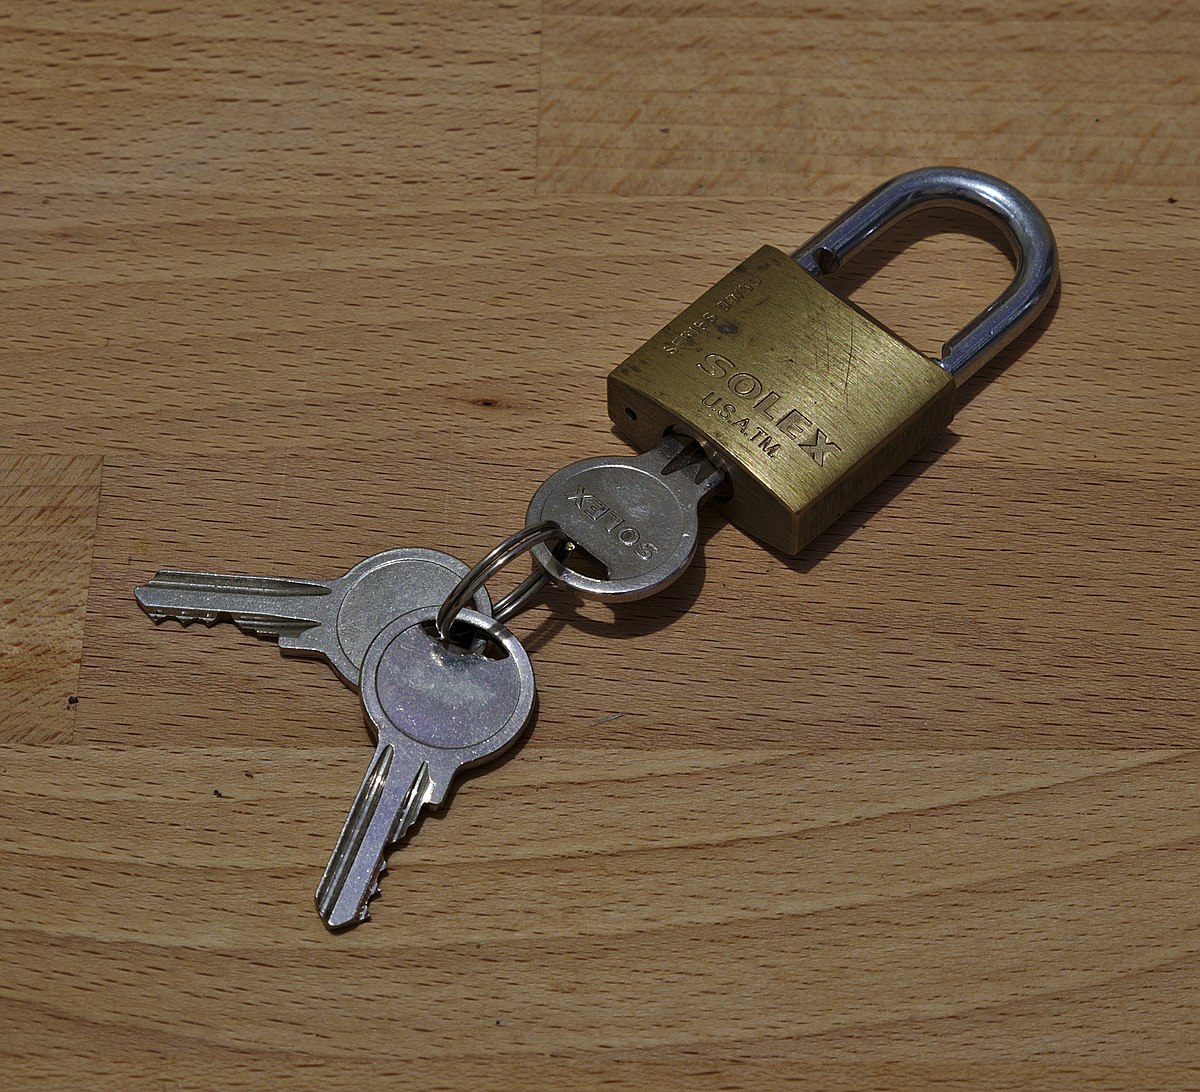 A key or a locked door.